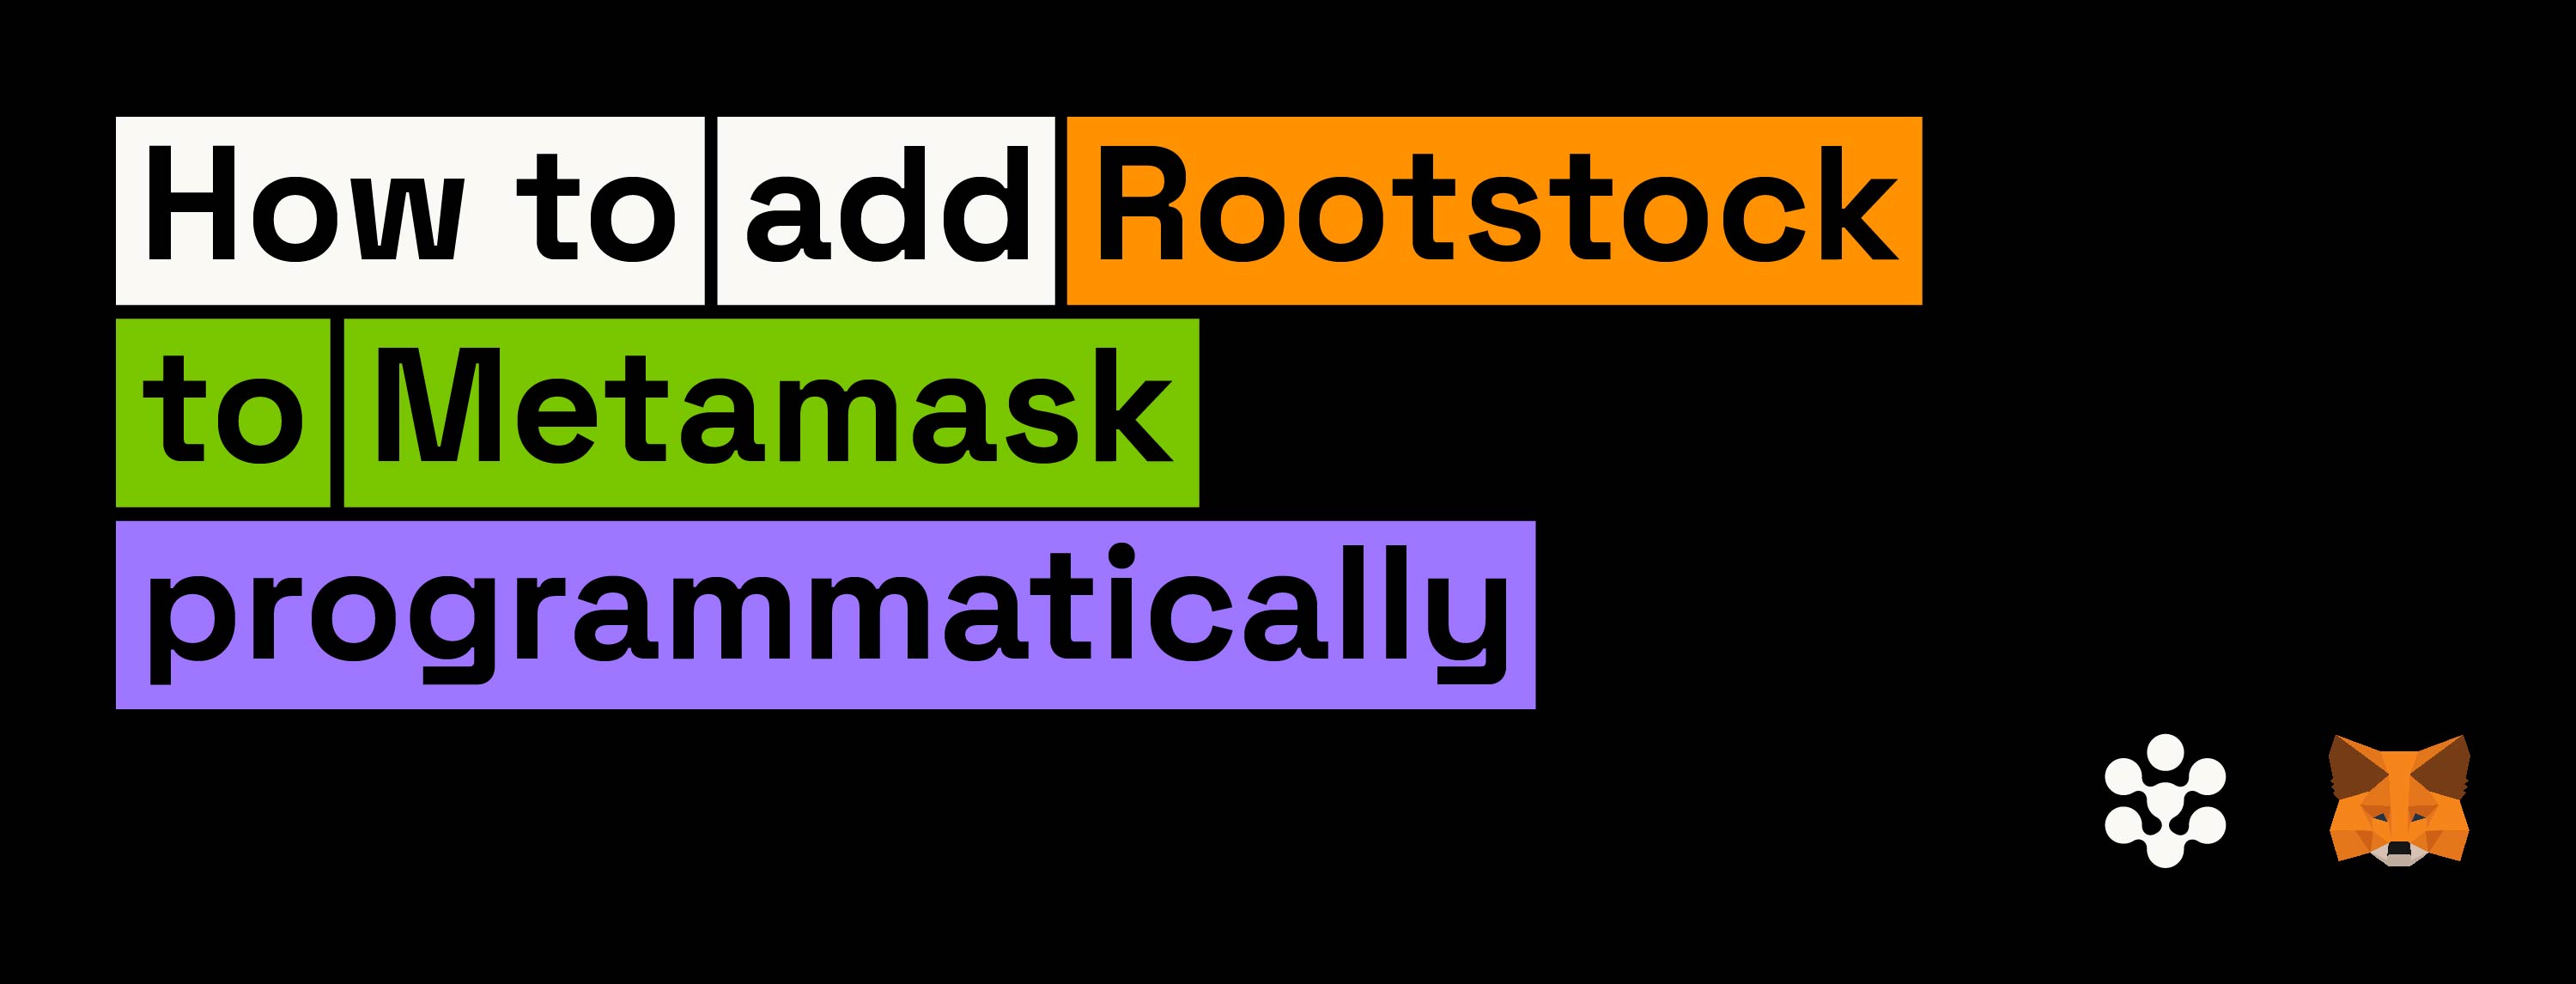 rootstock_metamask_banner